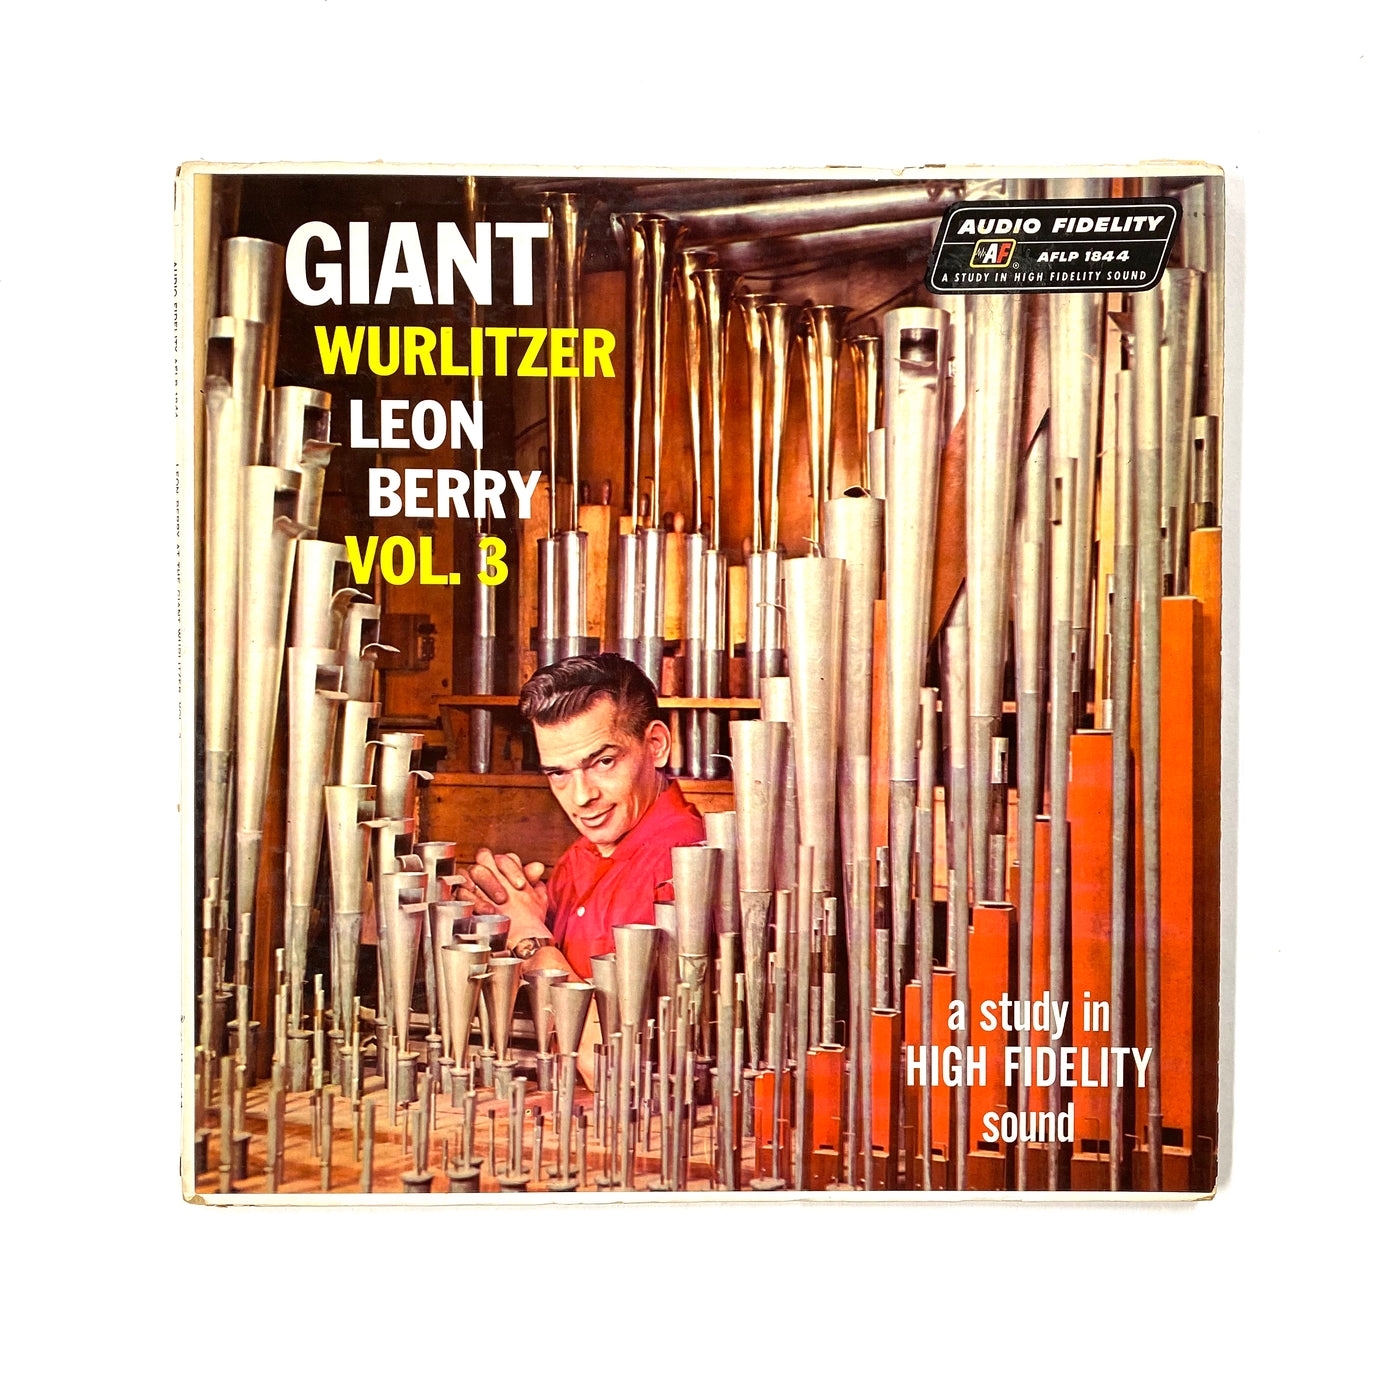 Leon Berry - Giant Wurlitzer Vol. 3